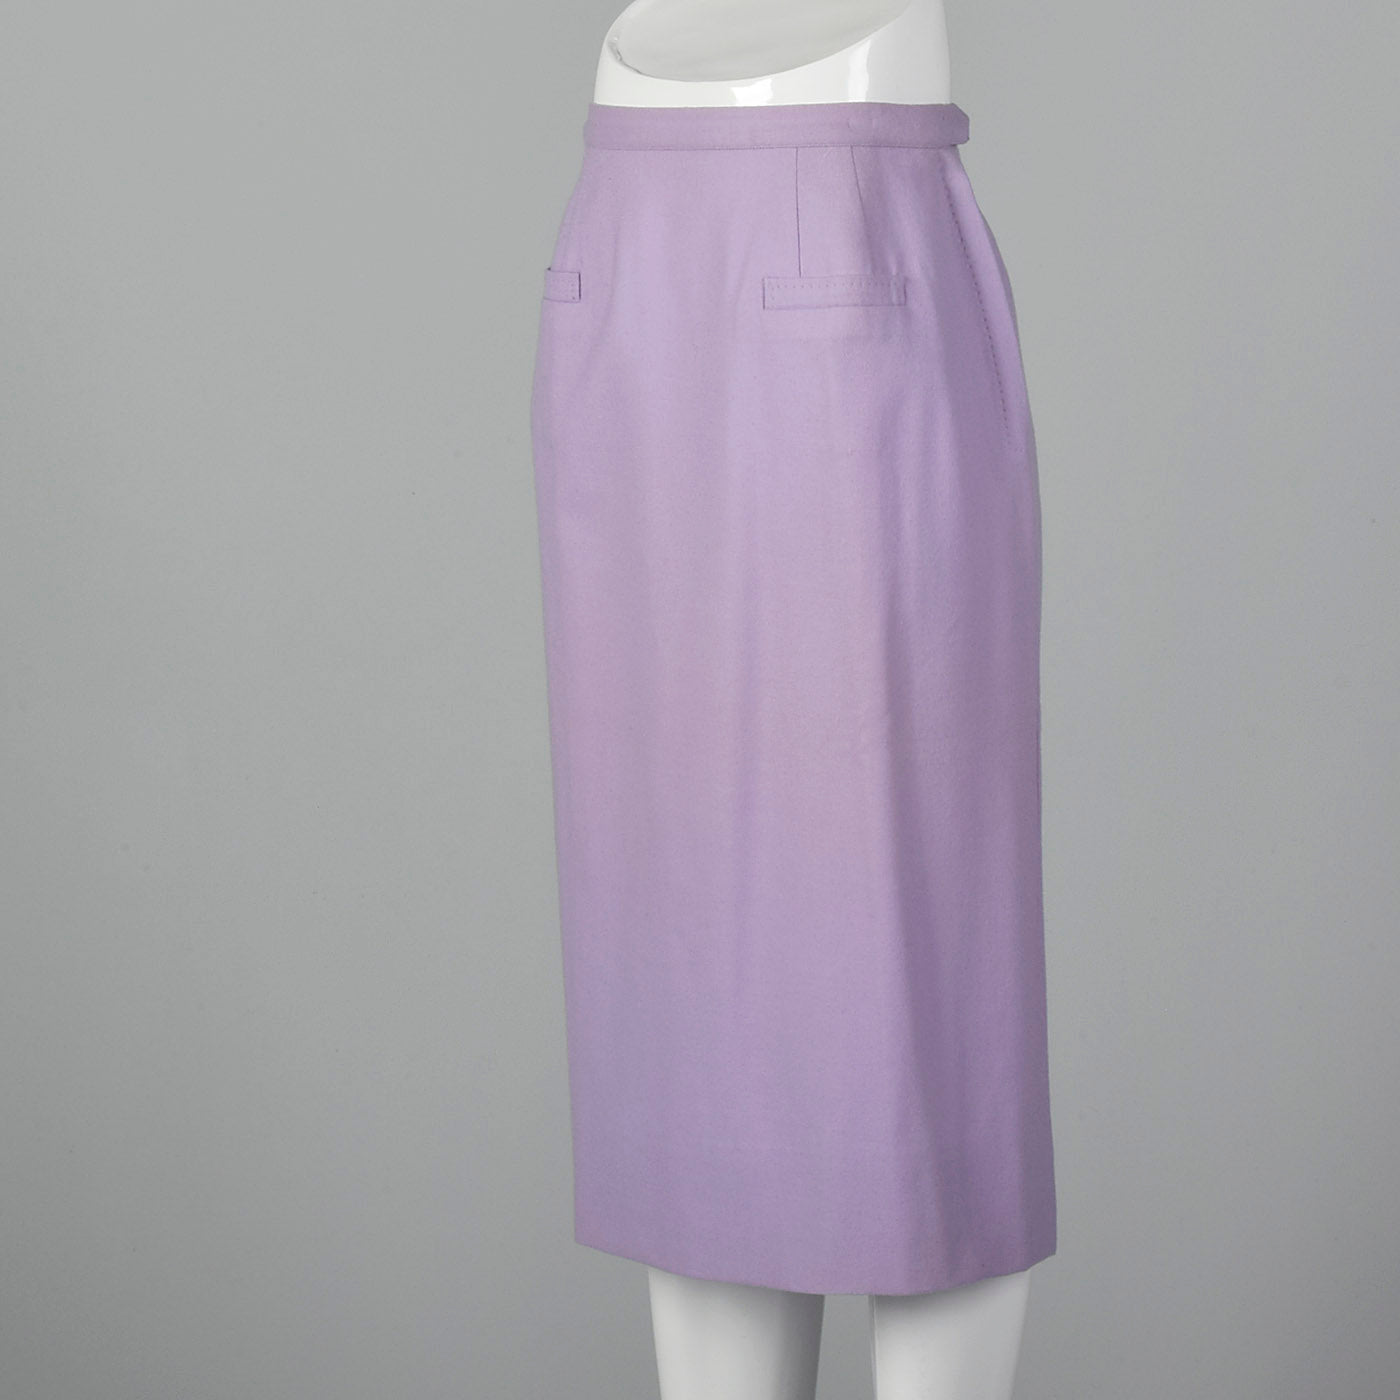 1950s Lavender Pencil Skirt